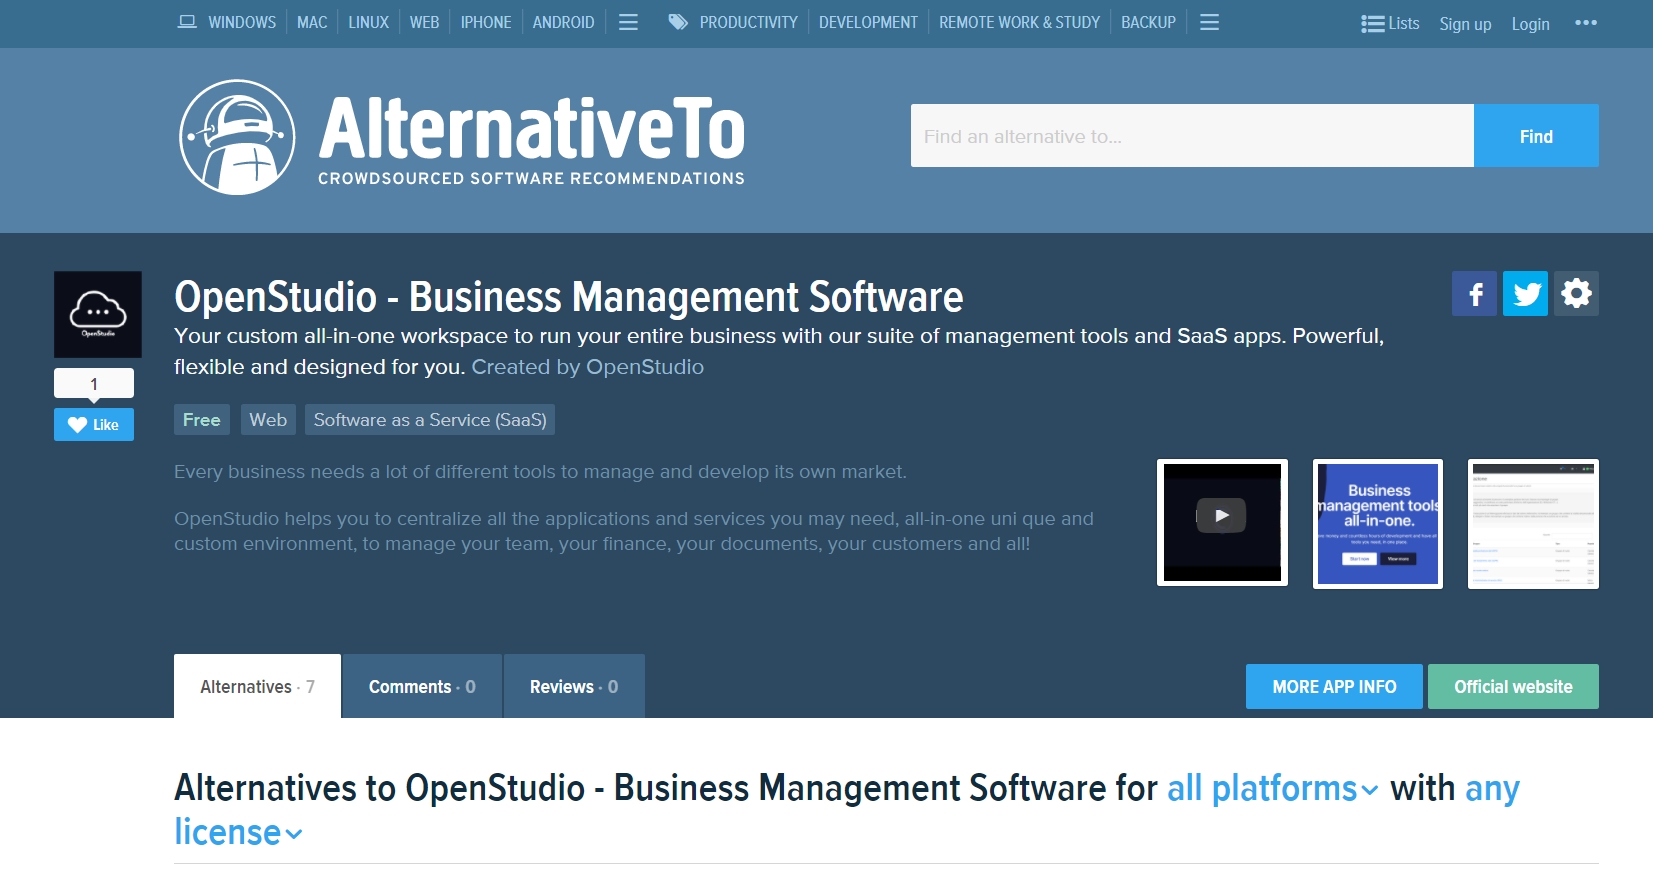 Alternatives to OpenStudio - Business Management Software